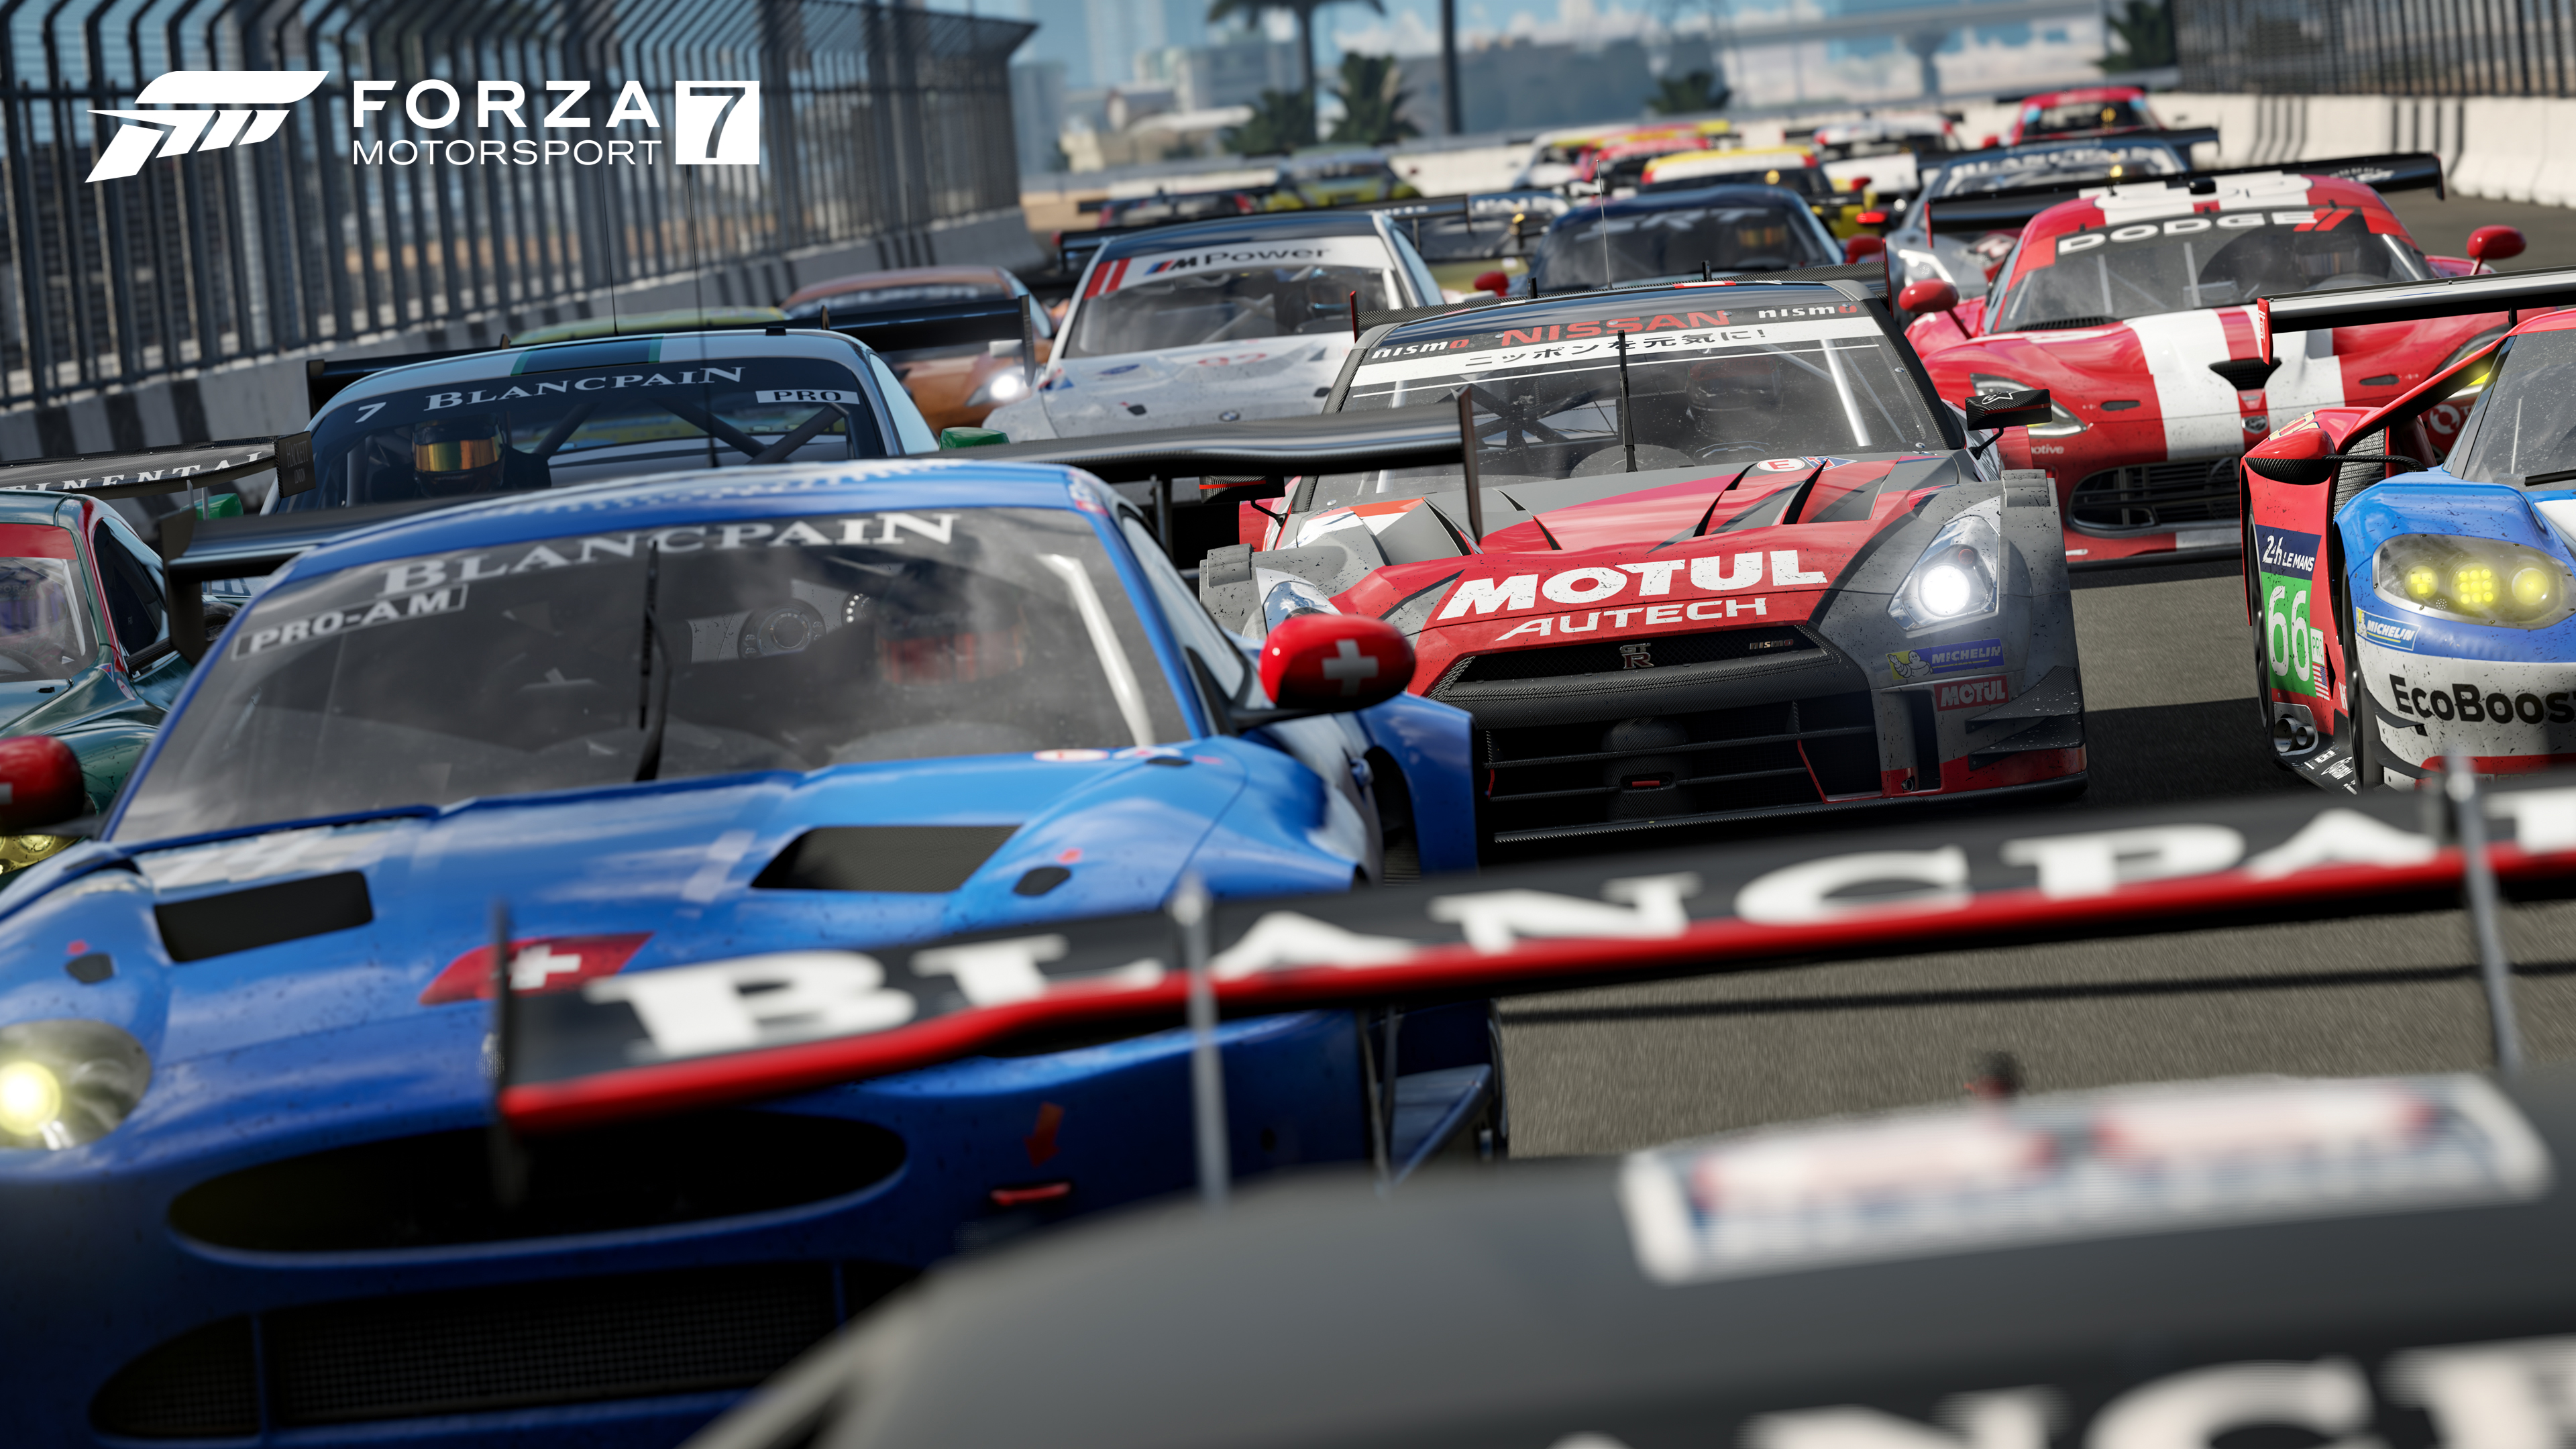 极限竞速7(Forza Motorsport 7)